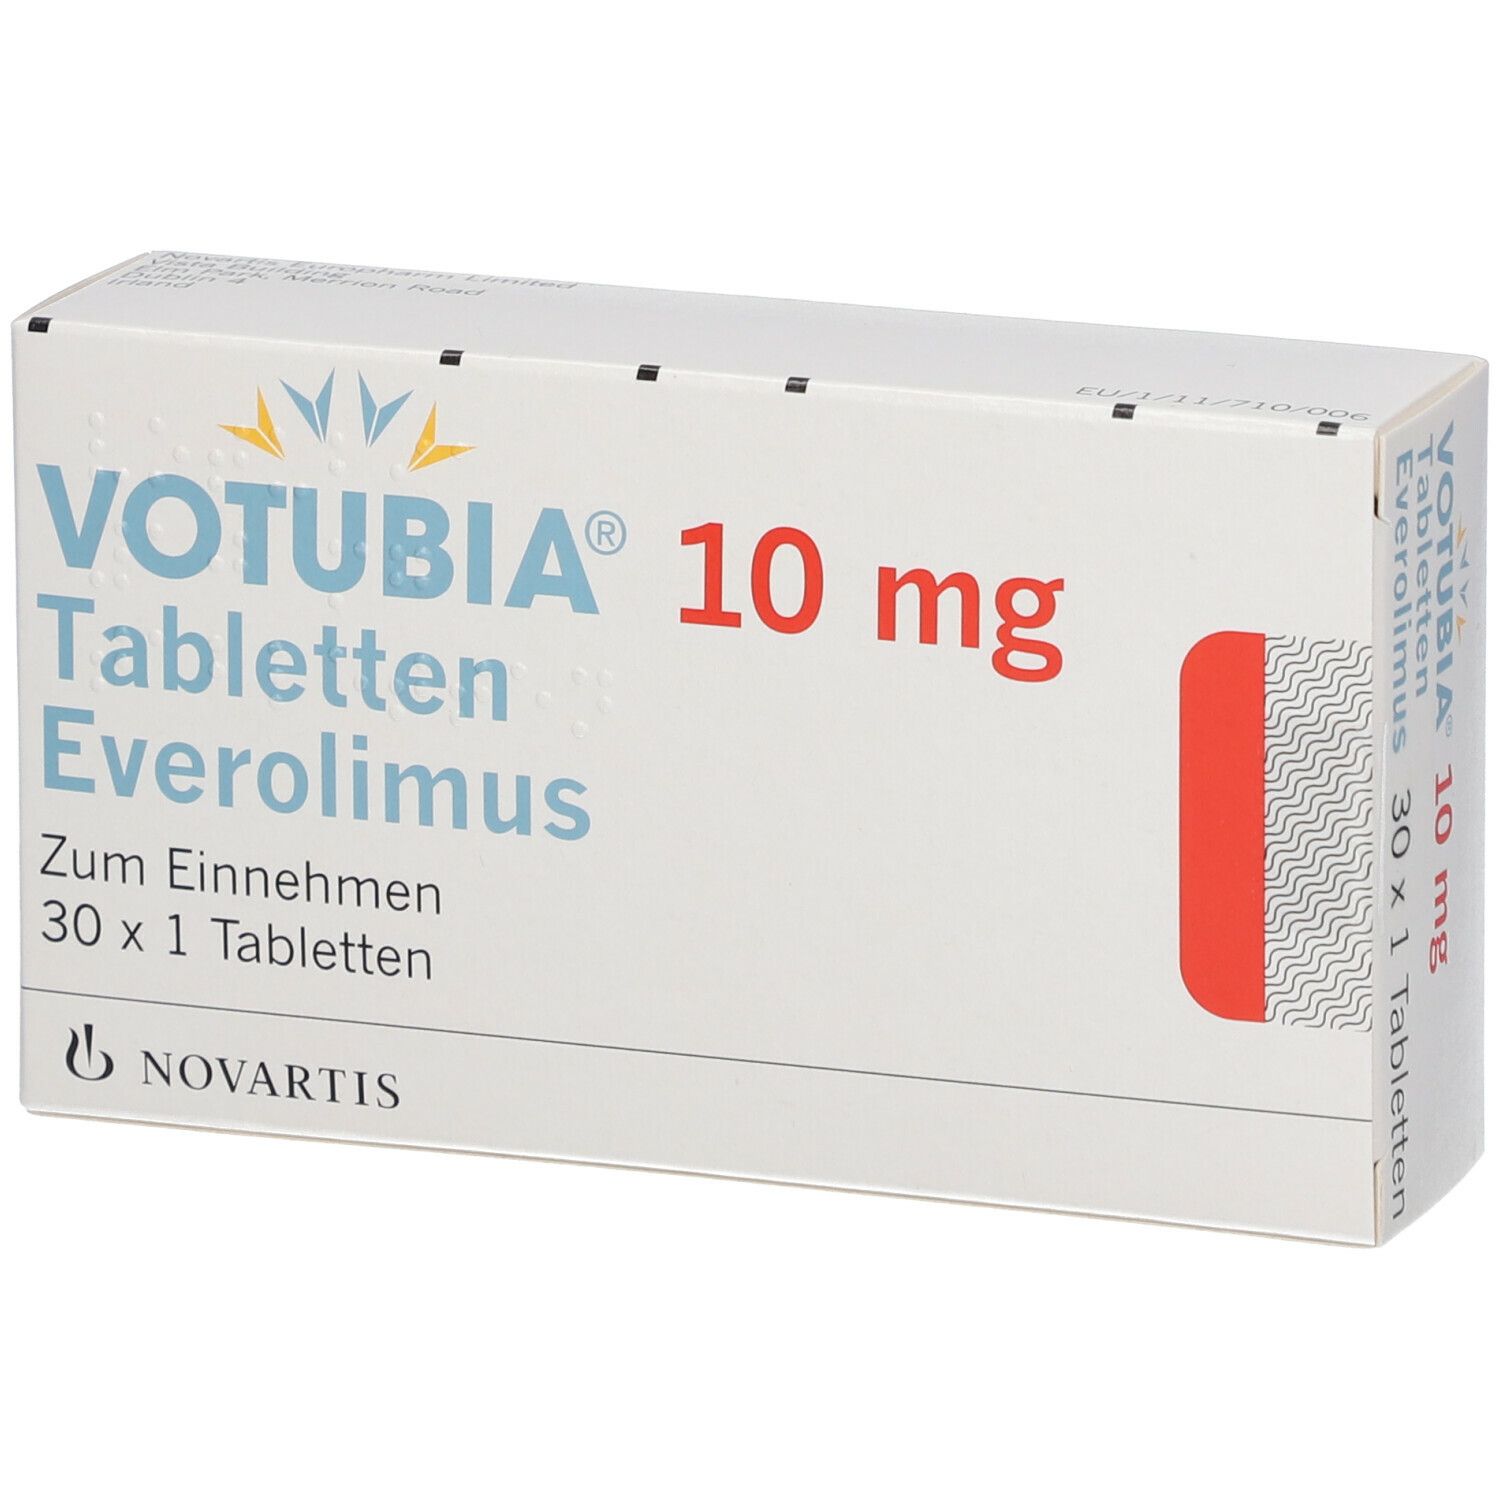 Votubia® 10 mg